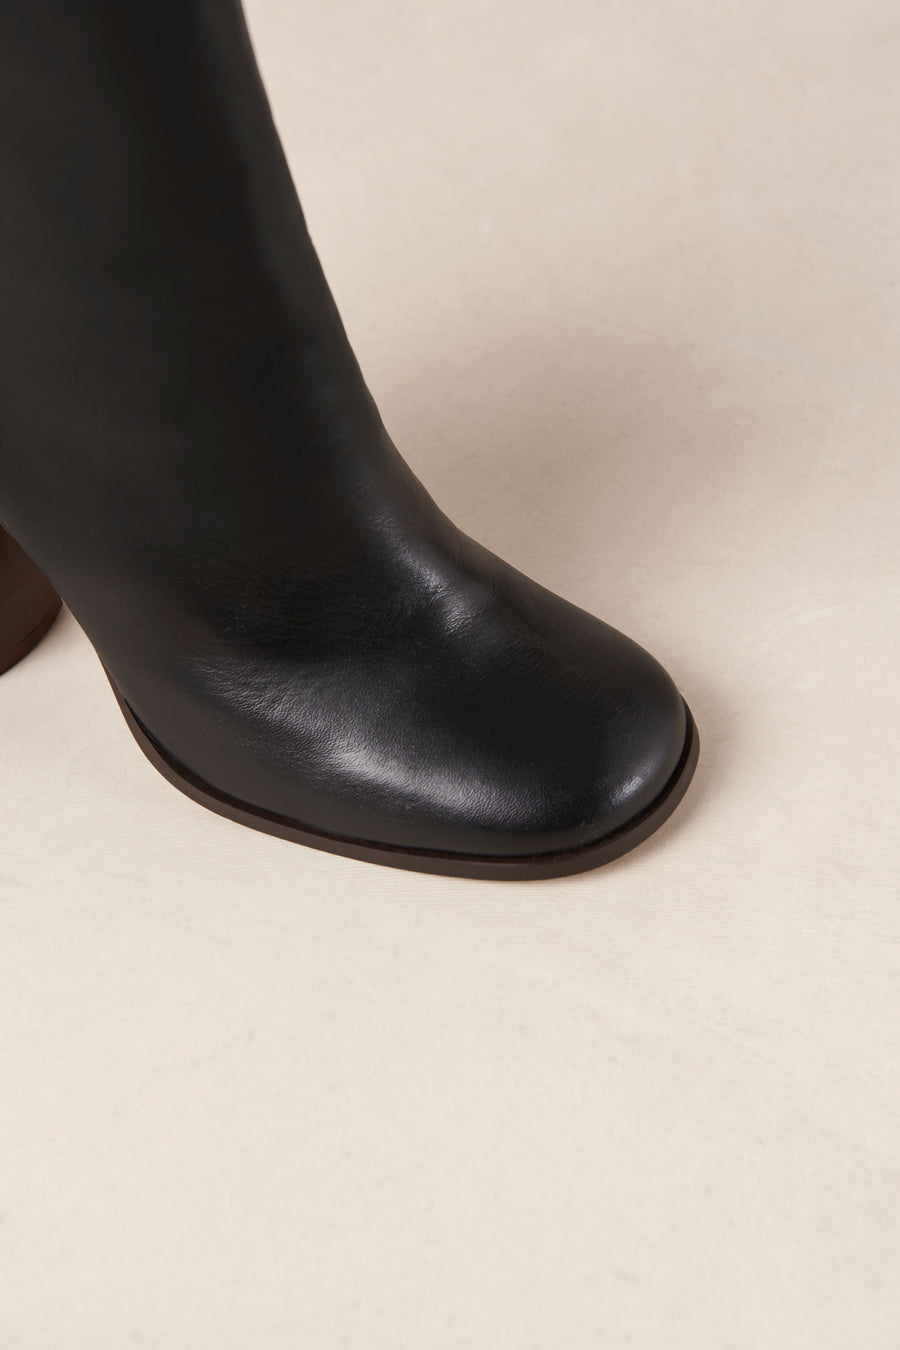 Reid Black Leather Ankle Boots